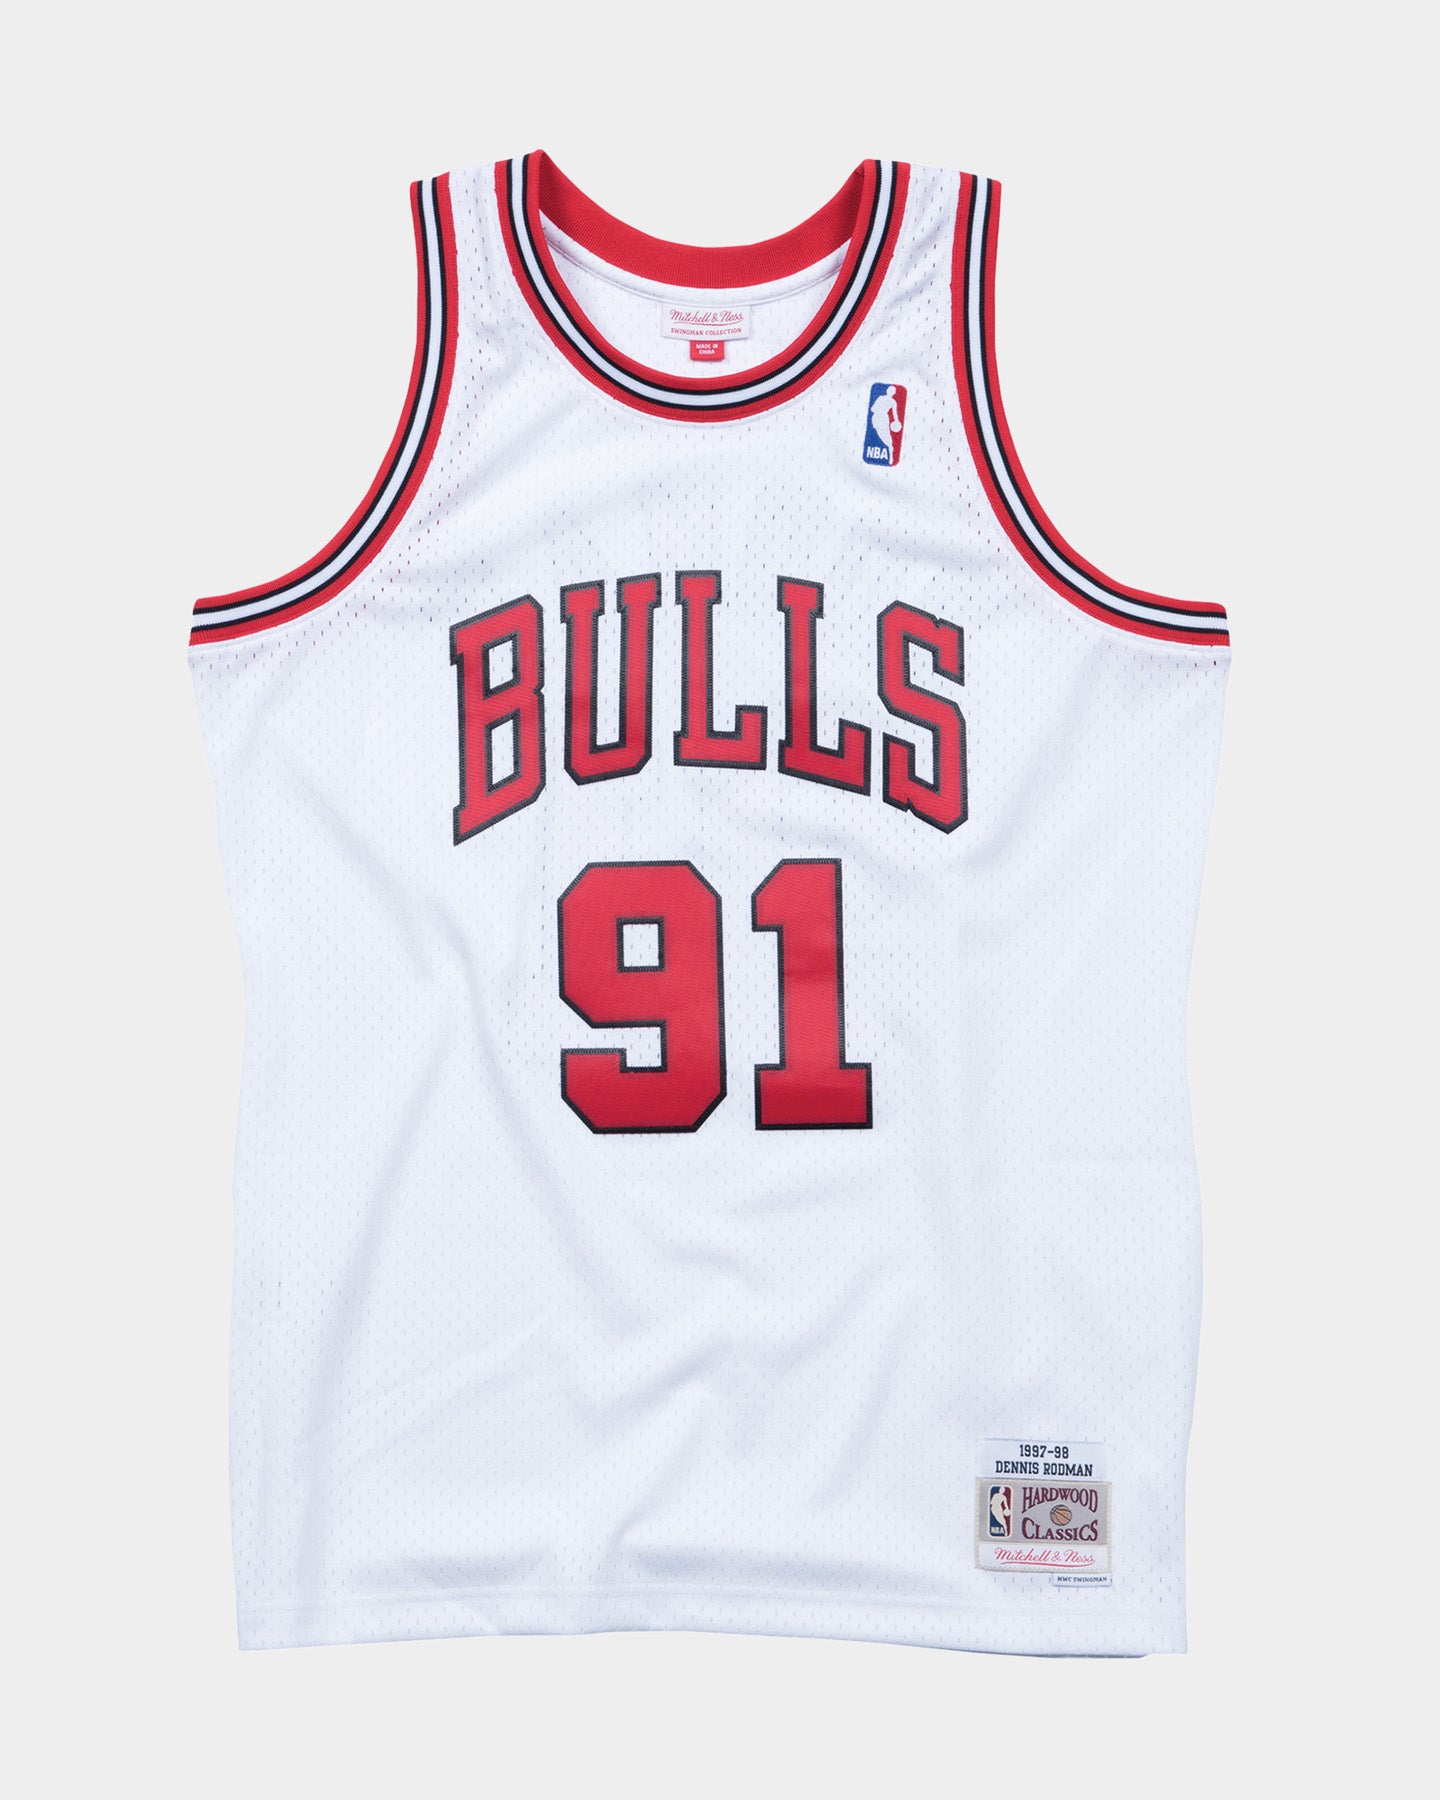 chicago bulls 91 jersey